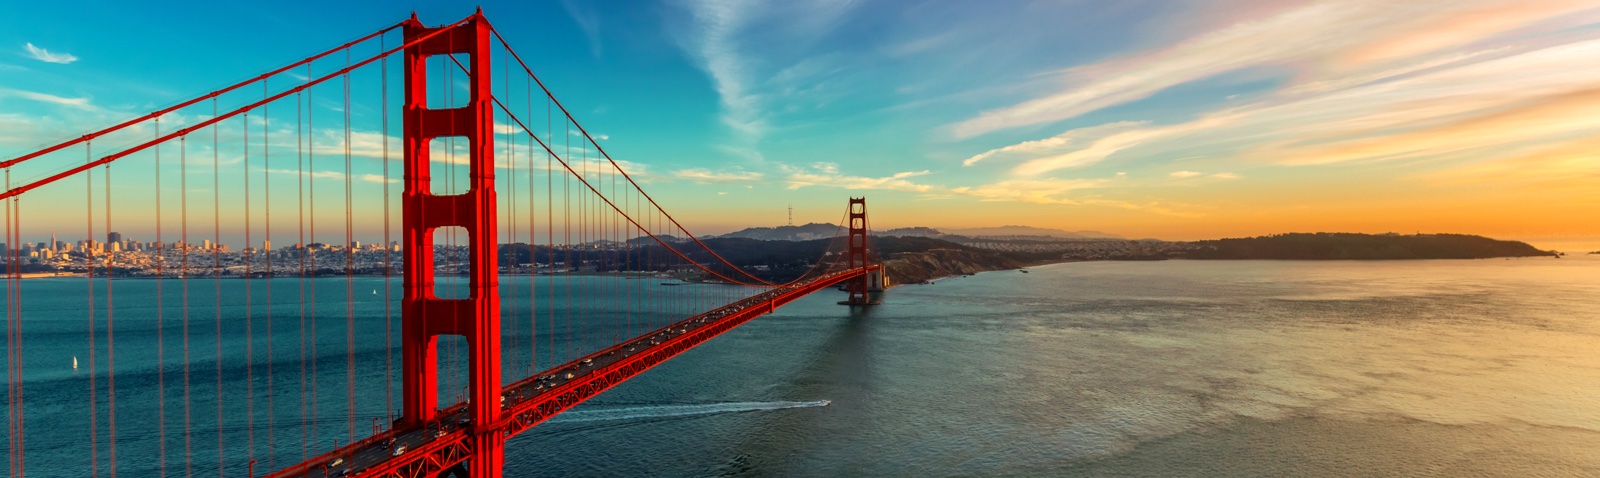 Scenic view of Golden Gate bridge